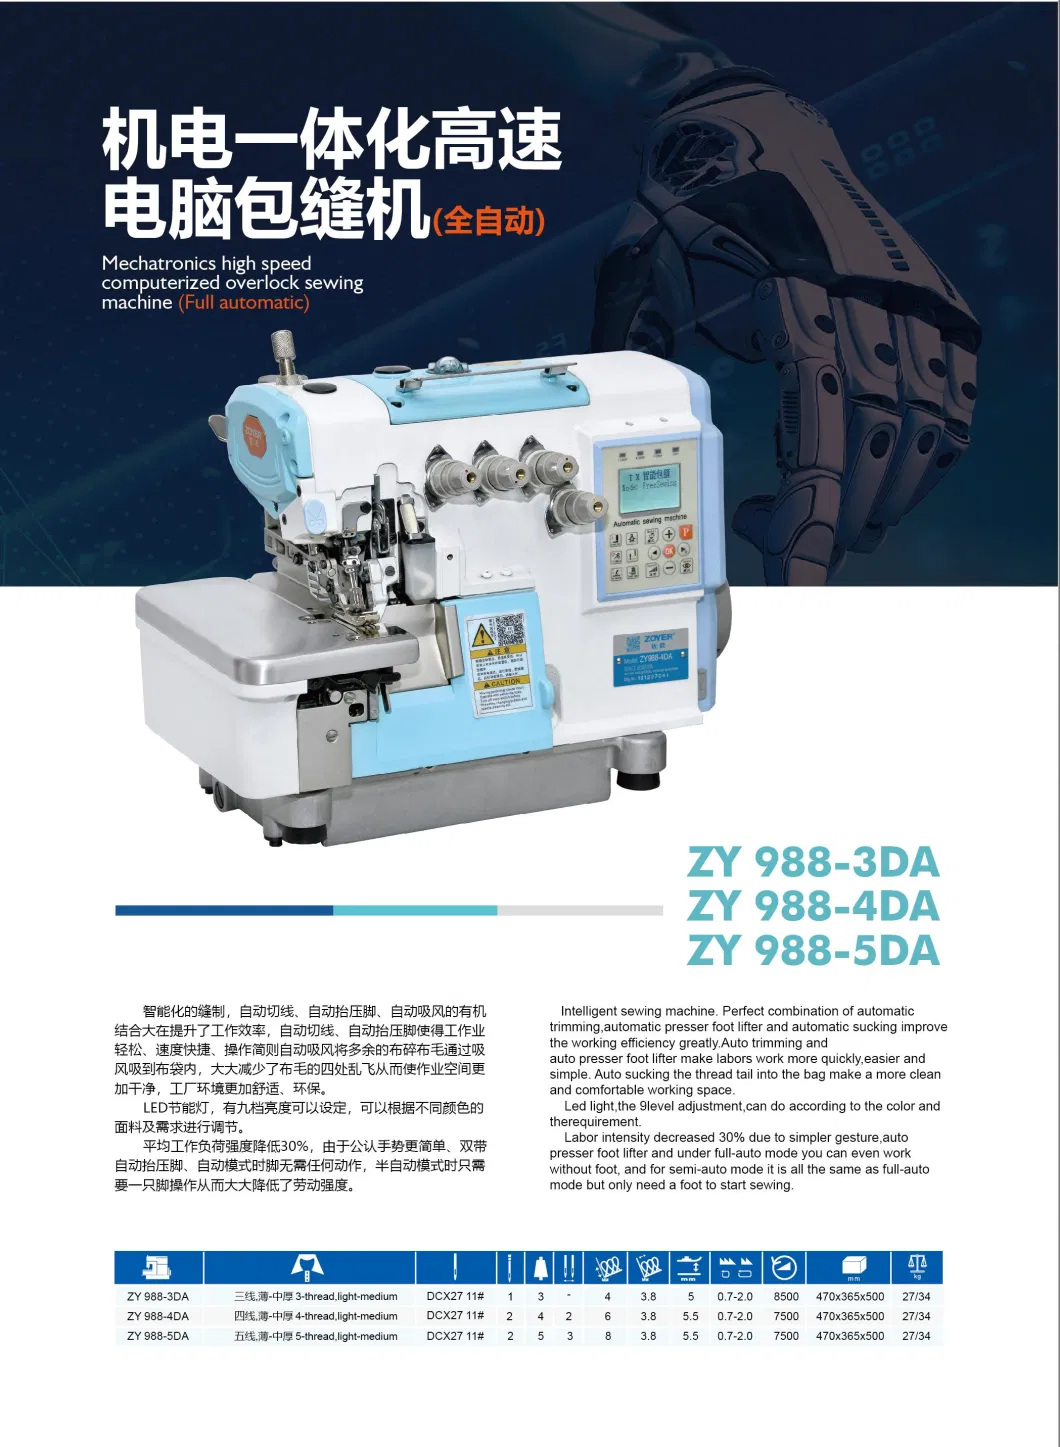 Zy988n-4da Zoyer Ex Series 4-Thread Super High Speed Auto Trimmer Full Automatic Overlock Sewing Machine